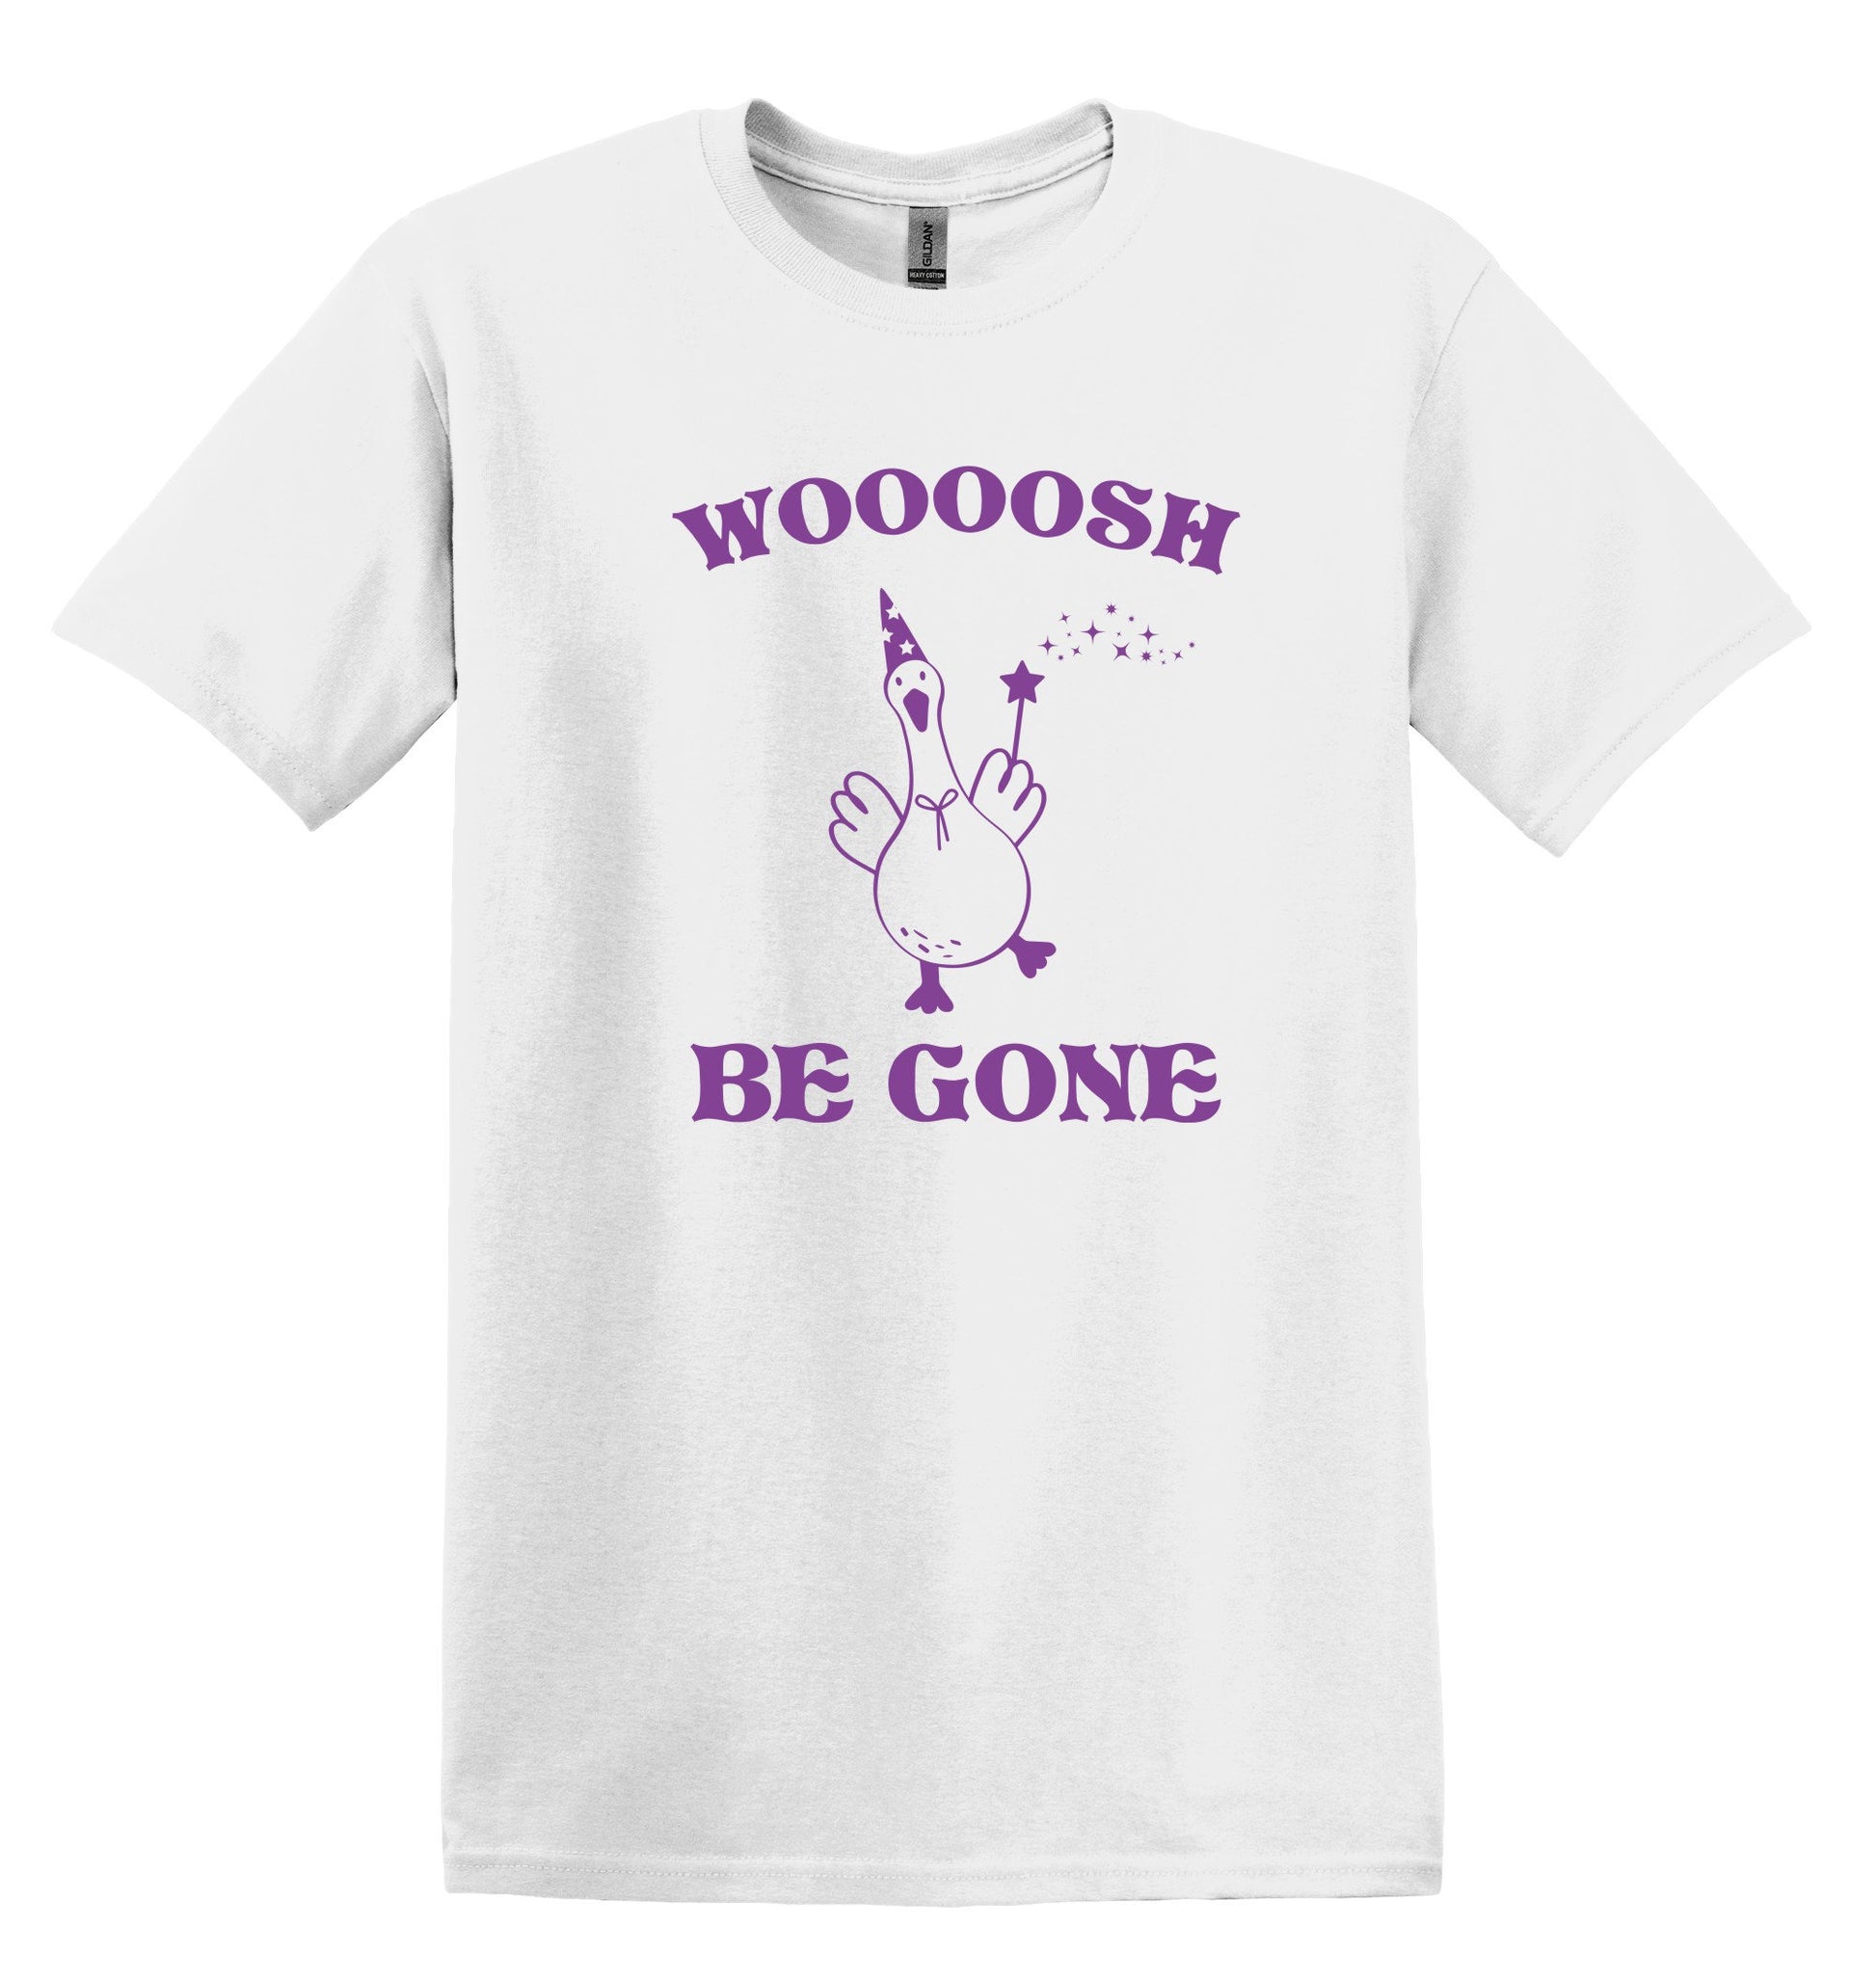 Woooosh Be Gone Goose Shirt Graphic Shirt Funny Shirts Vintage Funny T-Shirts Minimalist Shirt Cotton Unisex Shirt Nostalgia Shirt